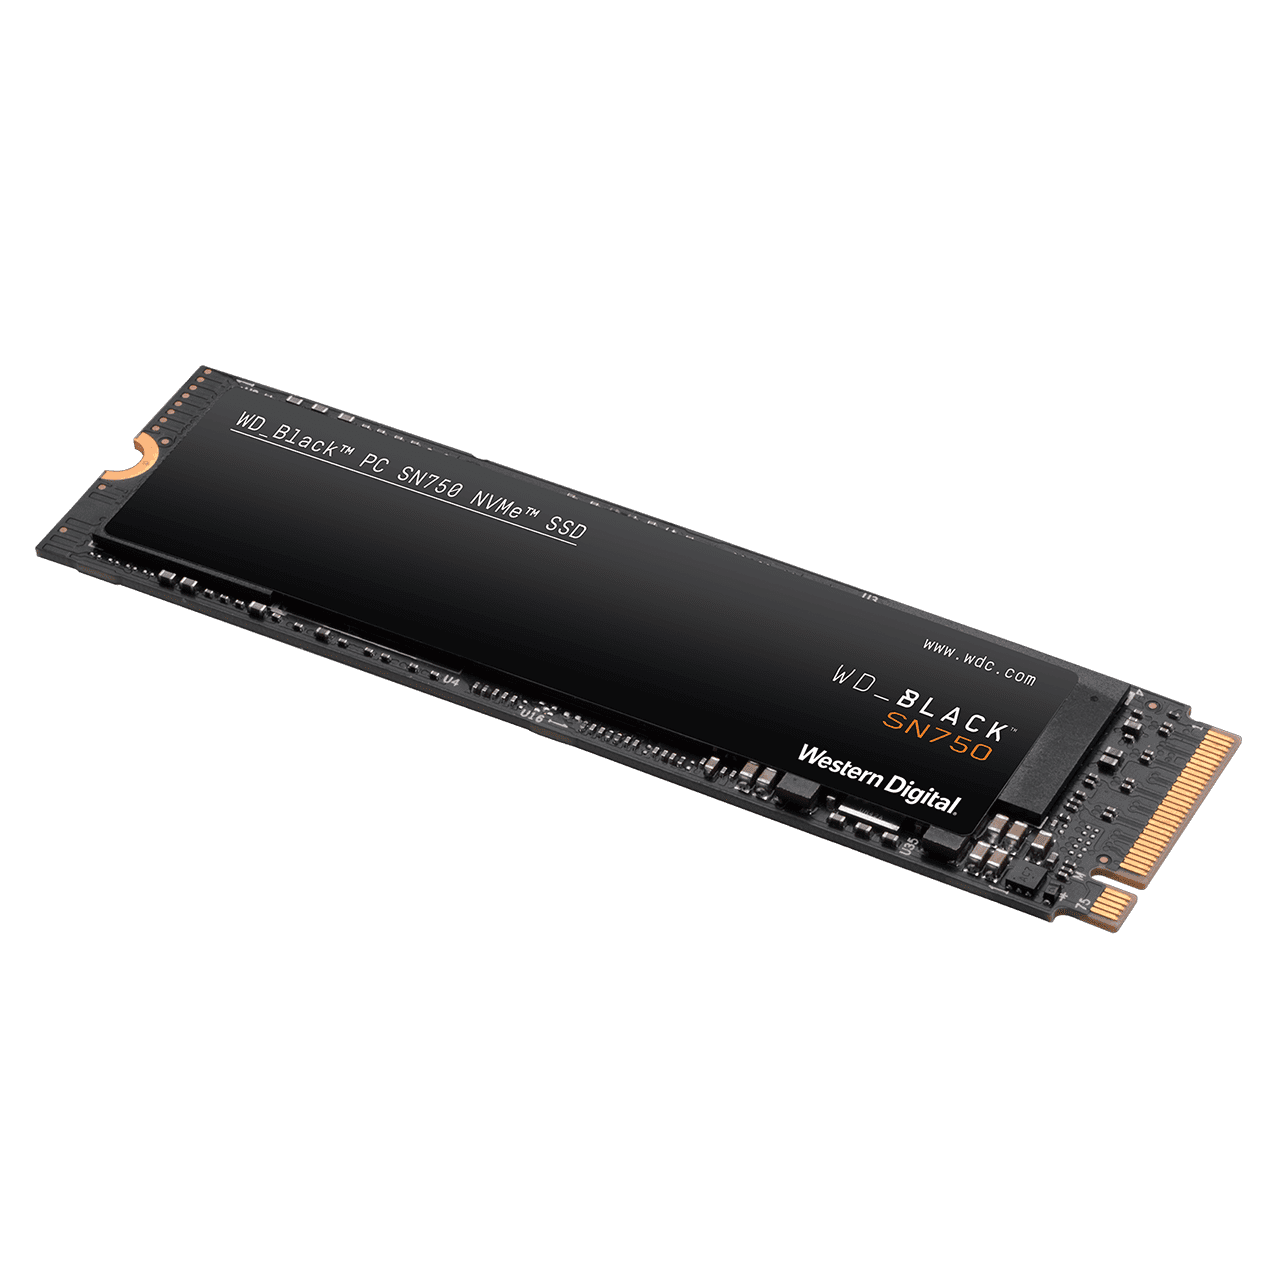 WD BLACK SN750 250GB SSD NVMe M.2 2280 (WDS250G3X0C)